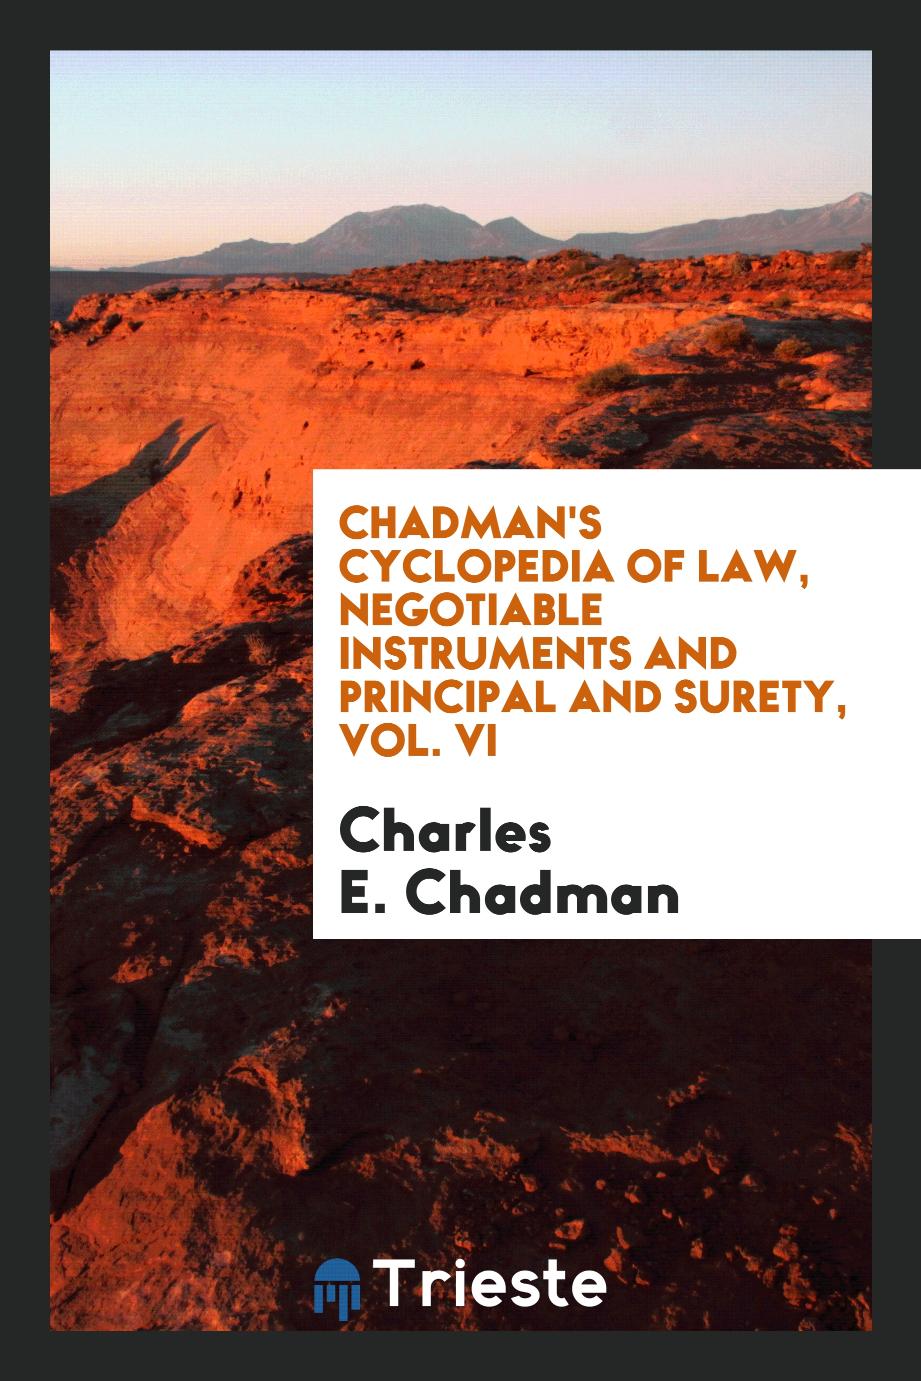 Chadman's cyclopedia of law, Negotiable Instruments and Principal and Surety, Vol. VI